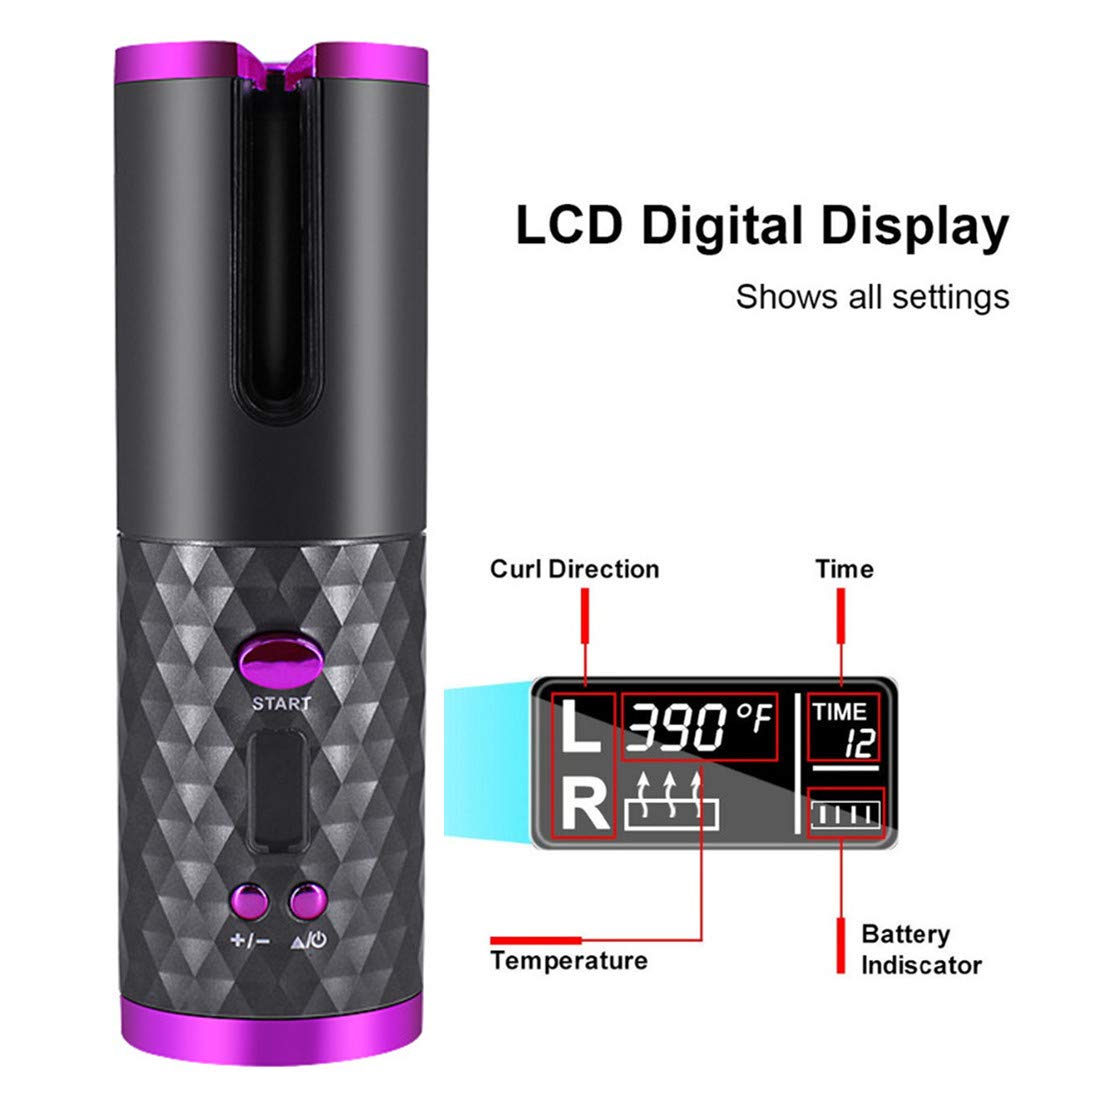 LCD Cordless Auto Rotating Ceramic Hair Curler Pink